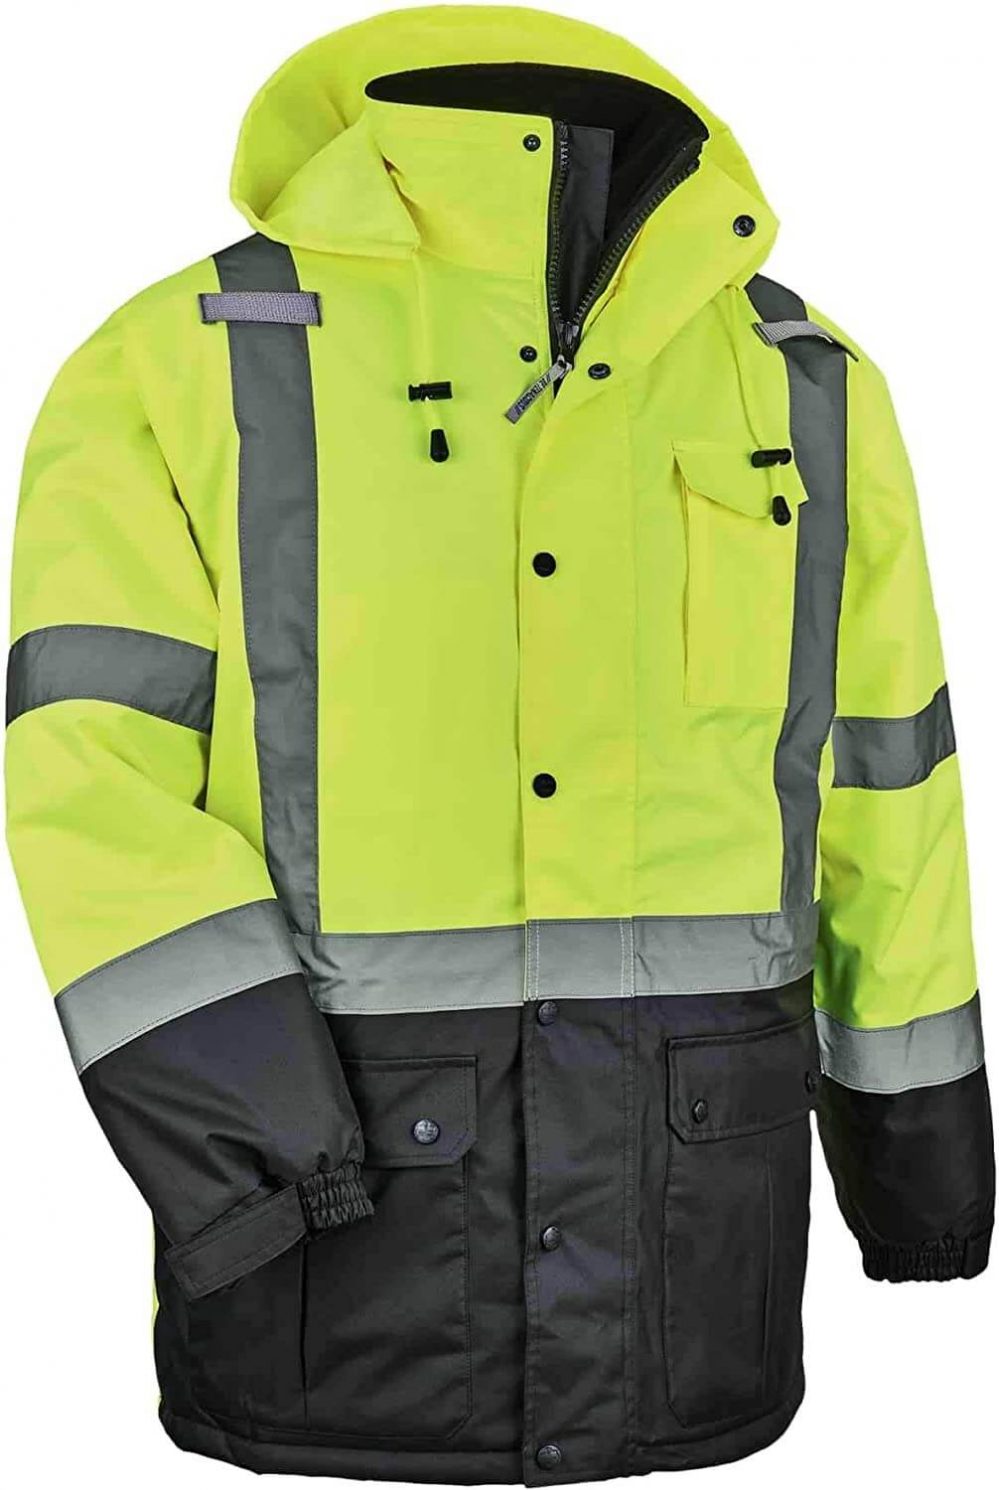 ergodyne-glowear-high-visibility-reflective-winter-safety-jacket